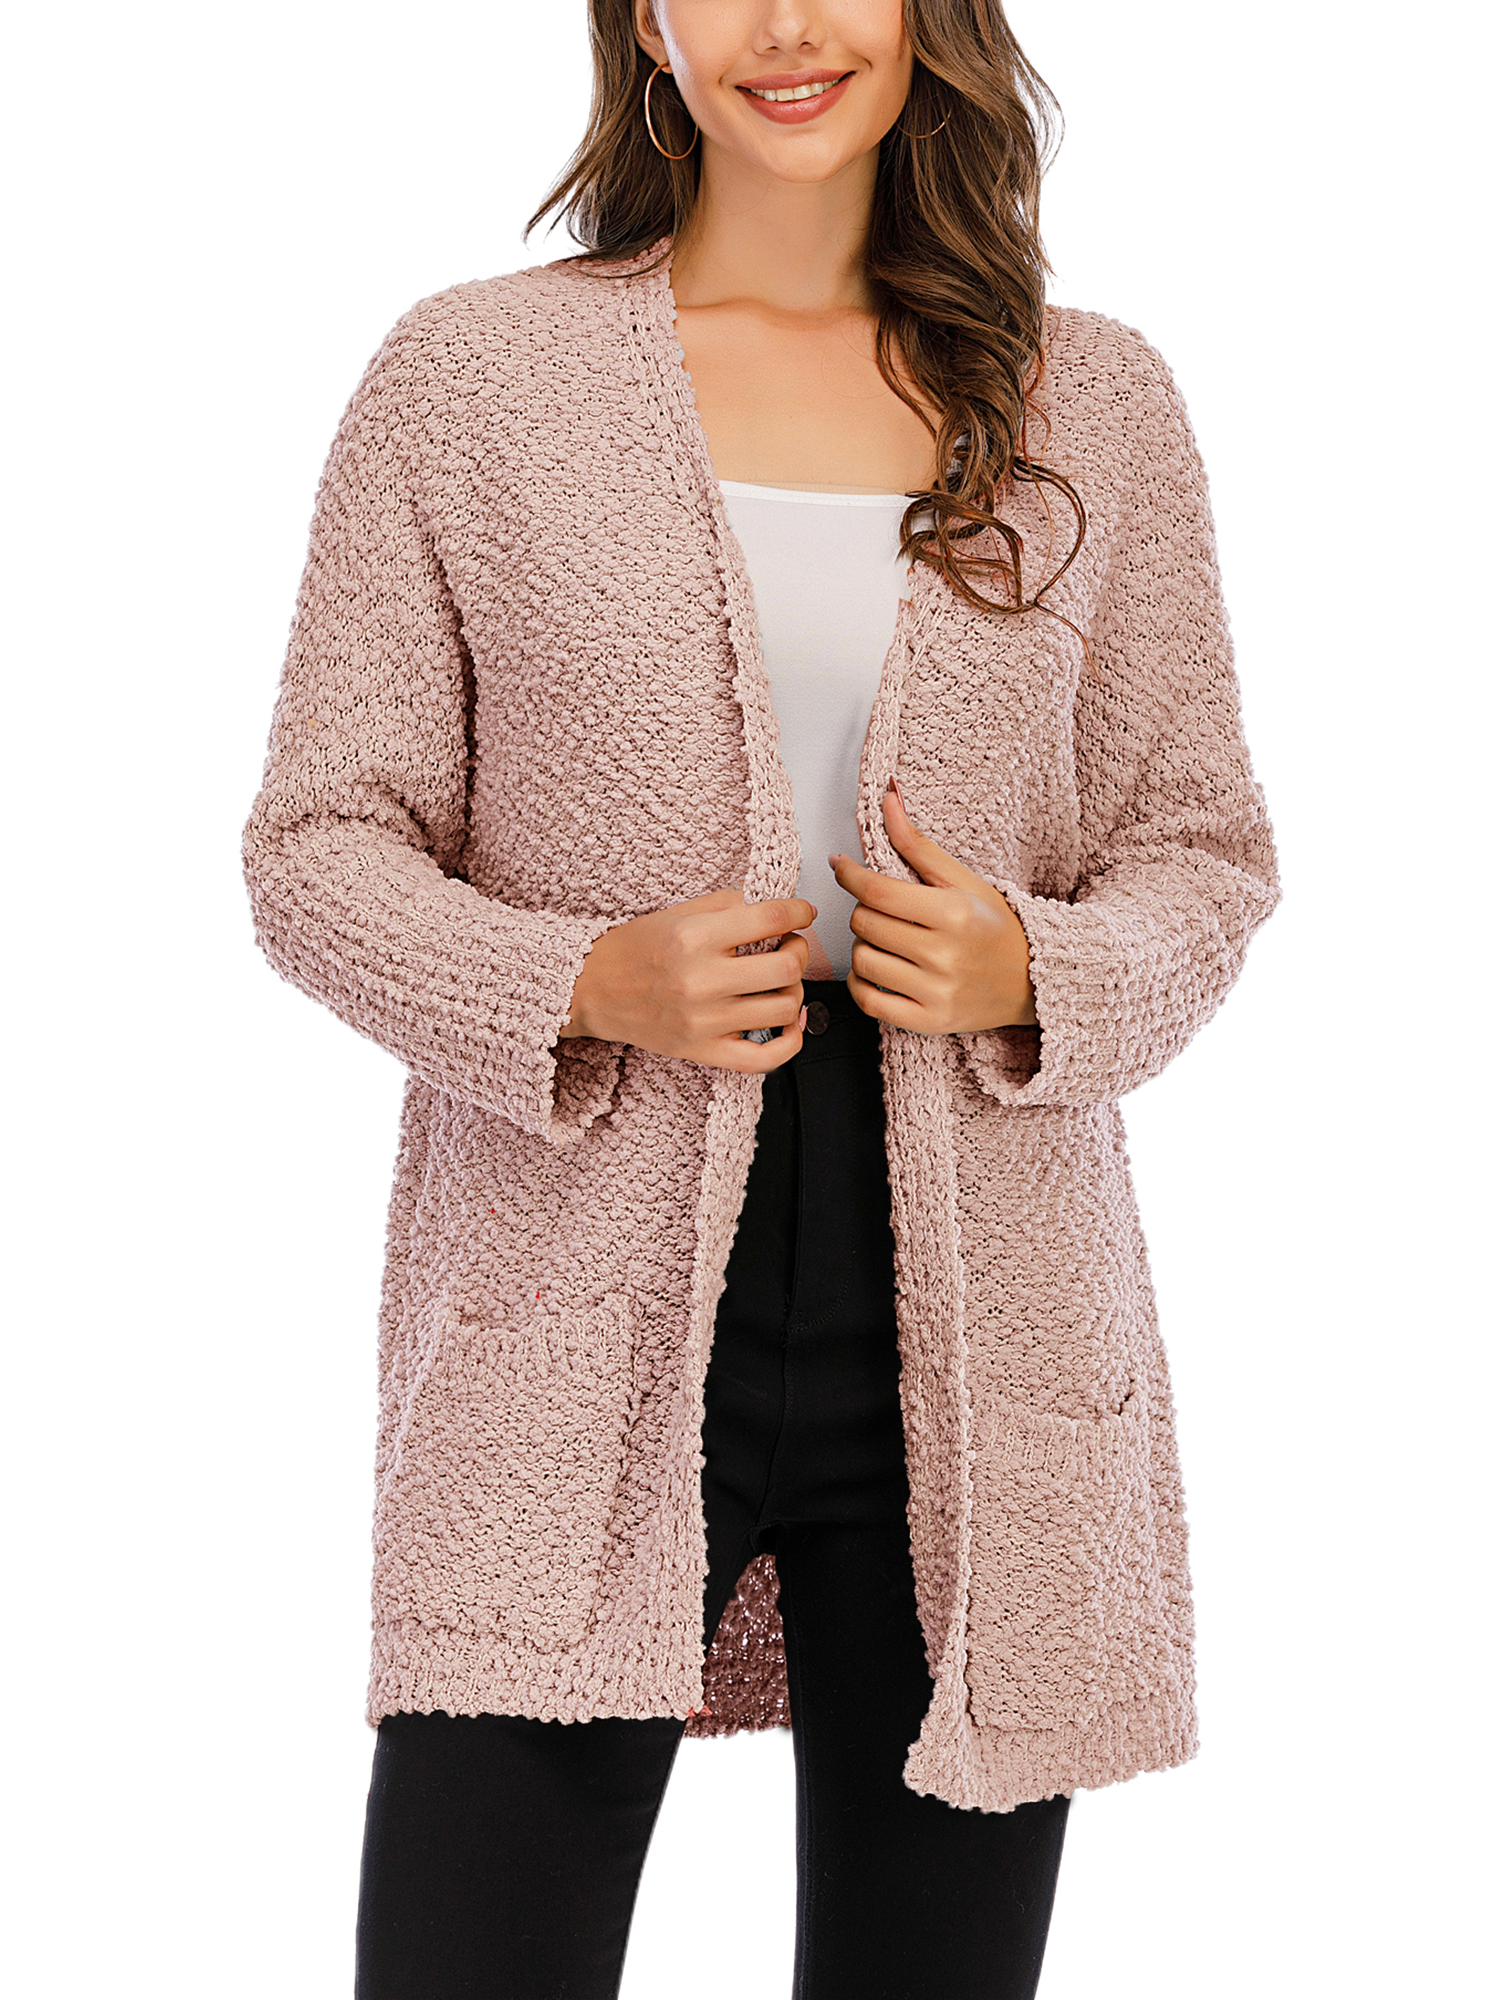 Womens Leopard Long Cardigan Fuzzy Chunky Knit Sweater Casual Pocket Tops Warm Fall Winter Coat